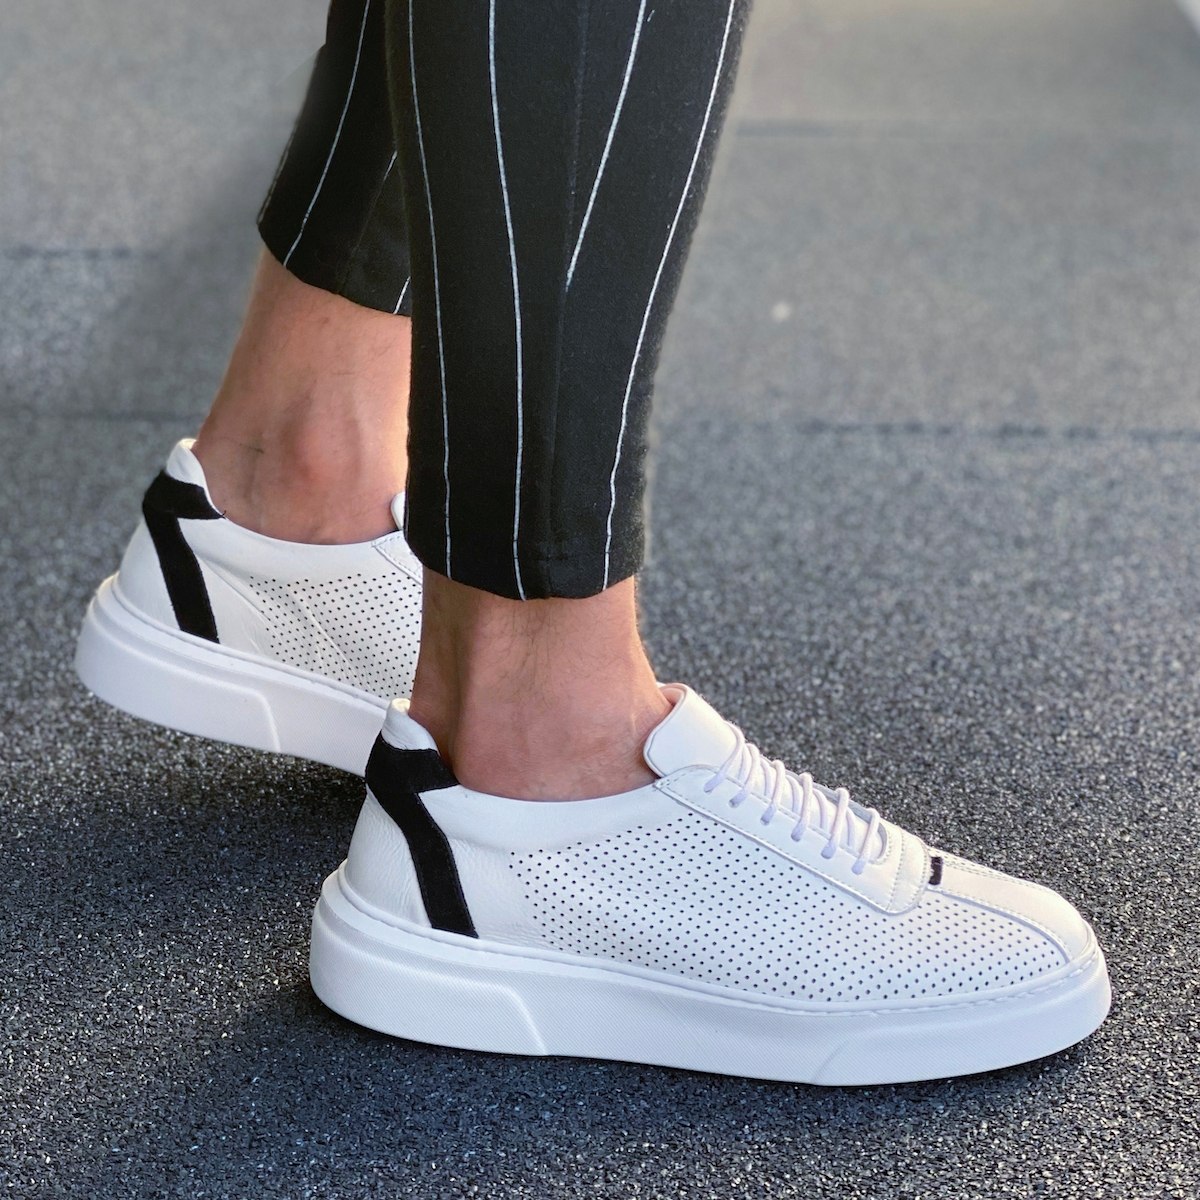 Martin Valen Men's Premium Genuine Leather Sneakers White